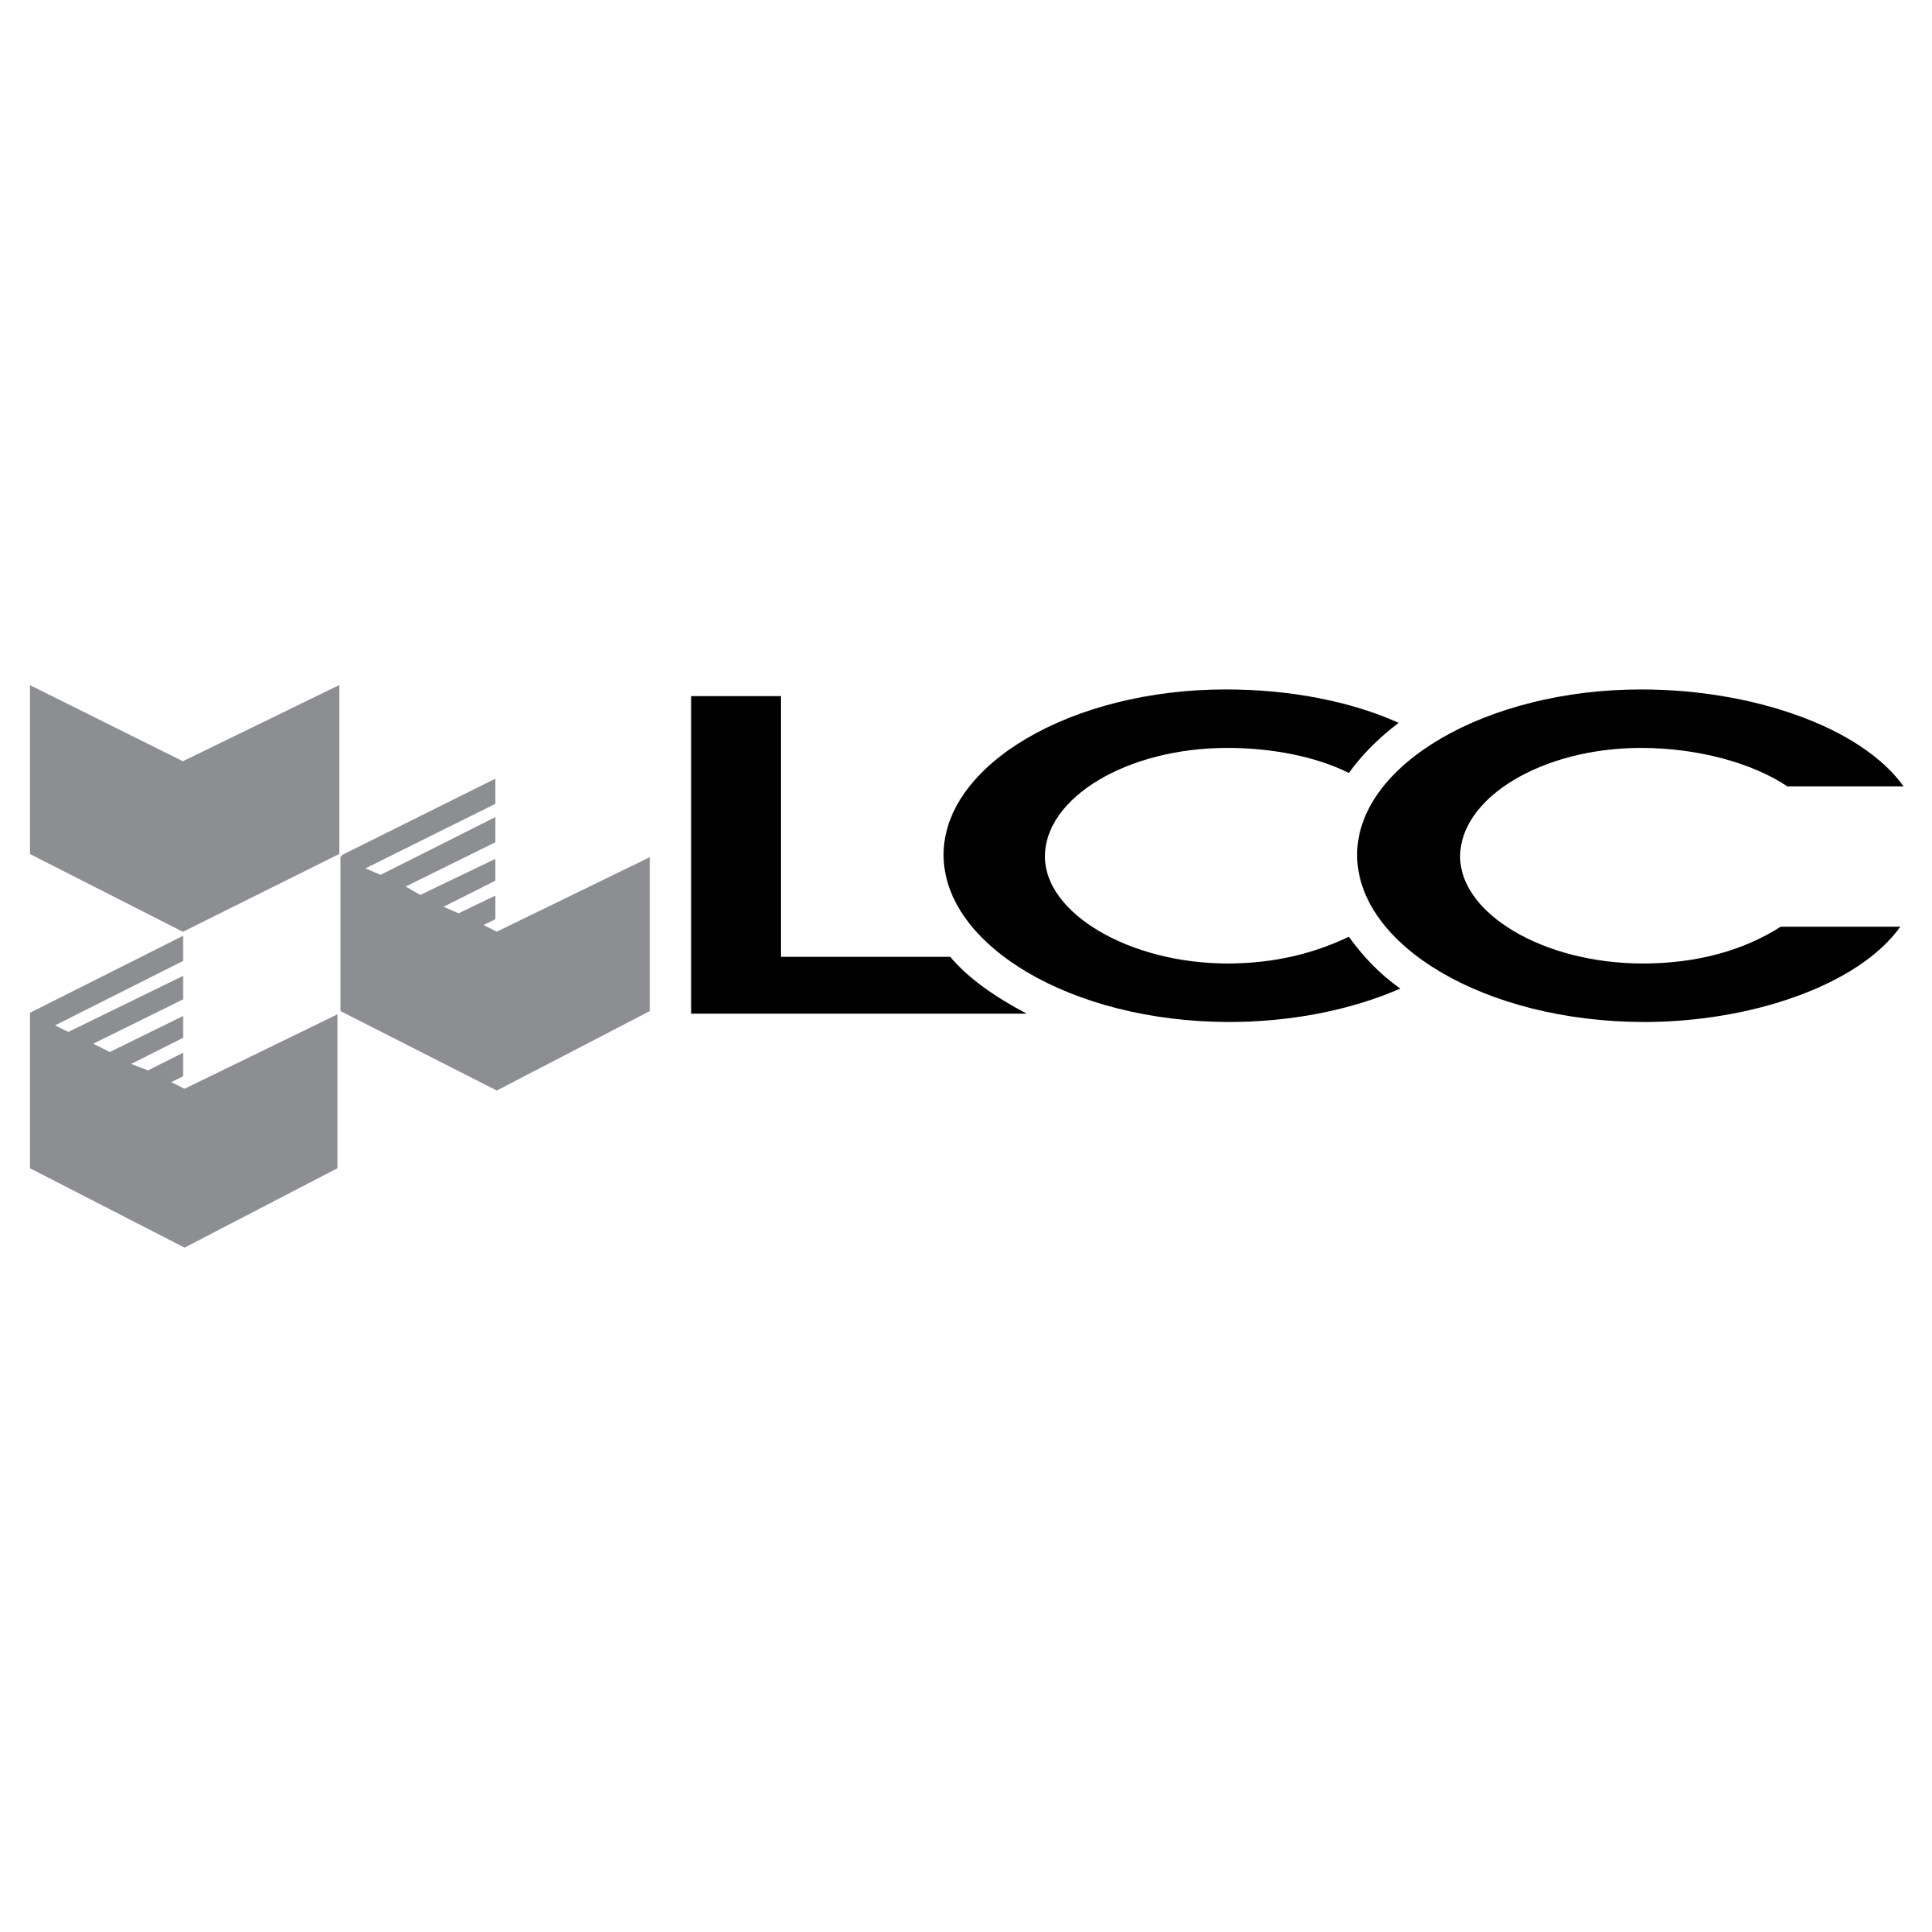 LCC Logo - LCC Logo PNG Transparent & SVG Vector - Freebie Supply